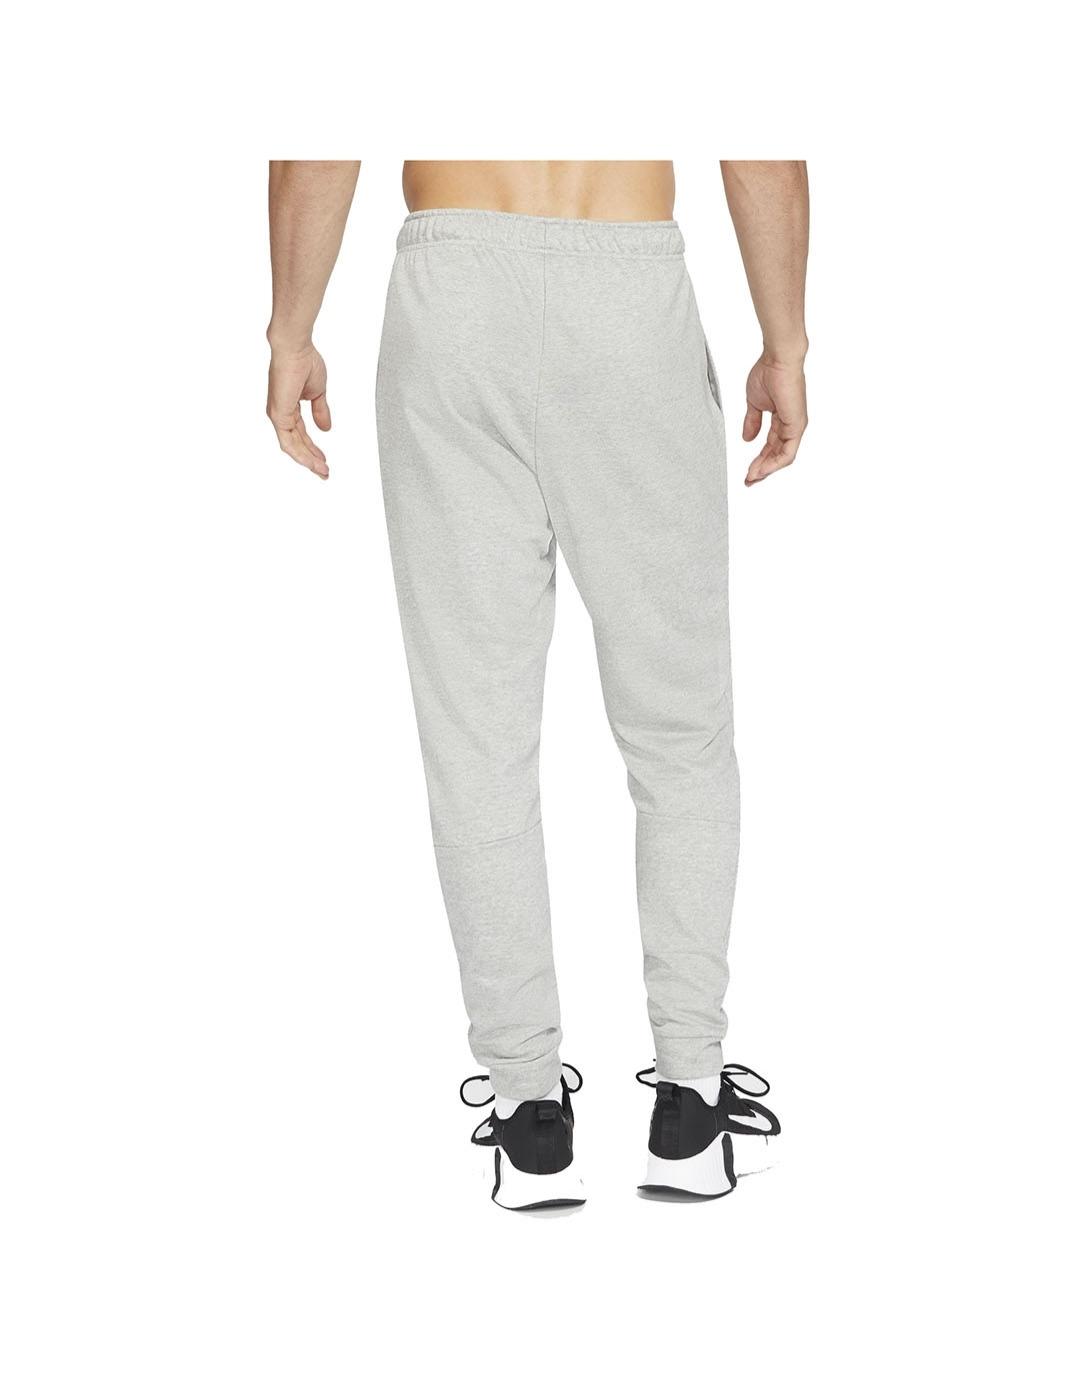 Pantalon Hombre Nike Dri-FIT Gris